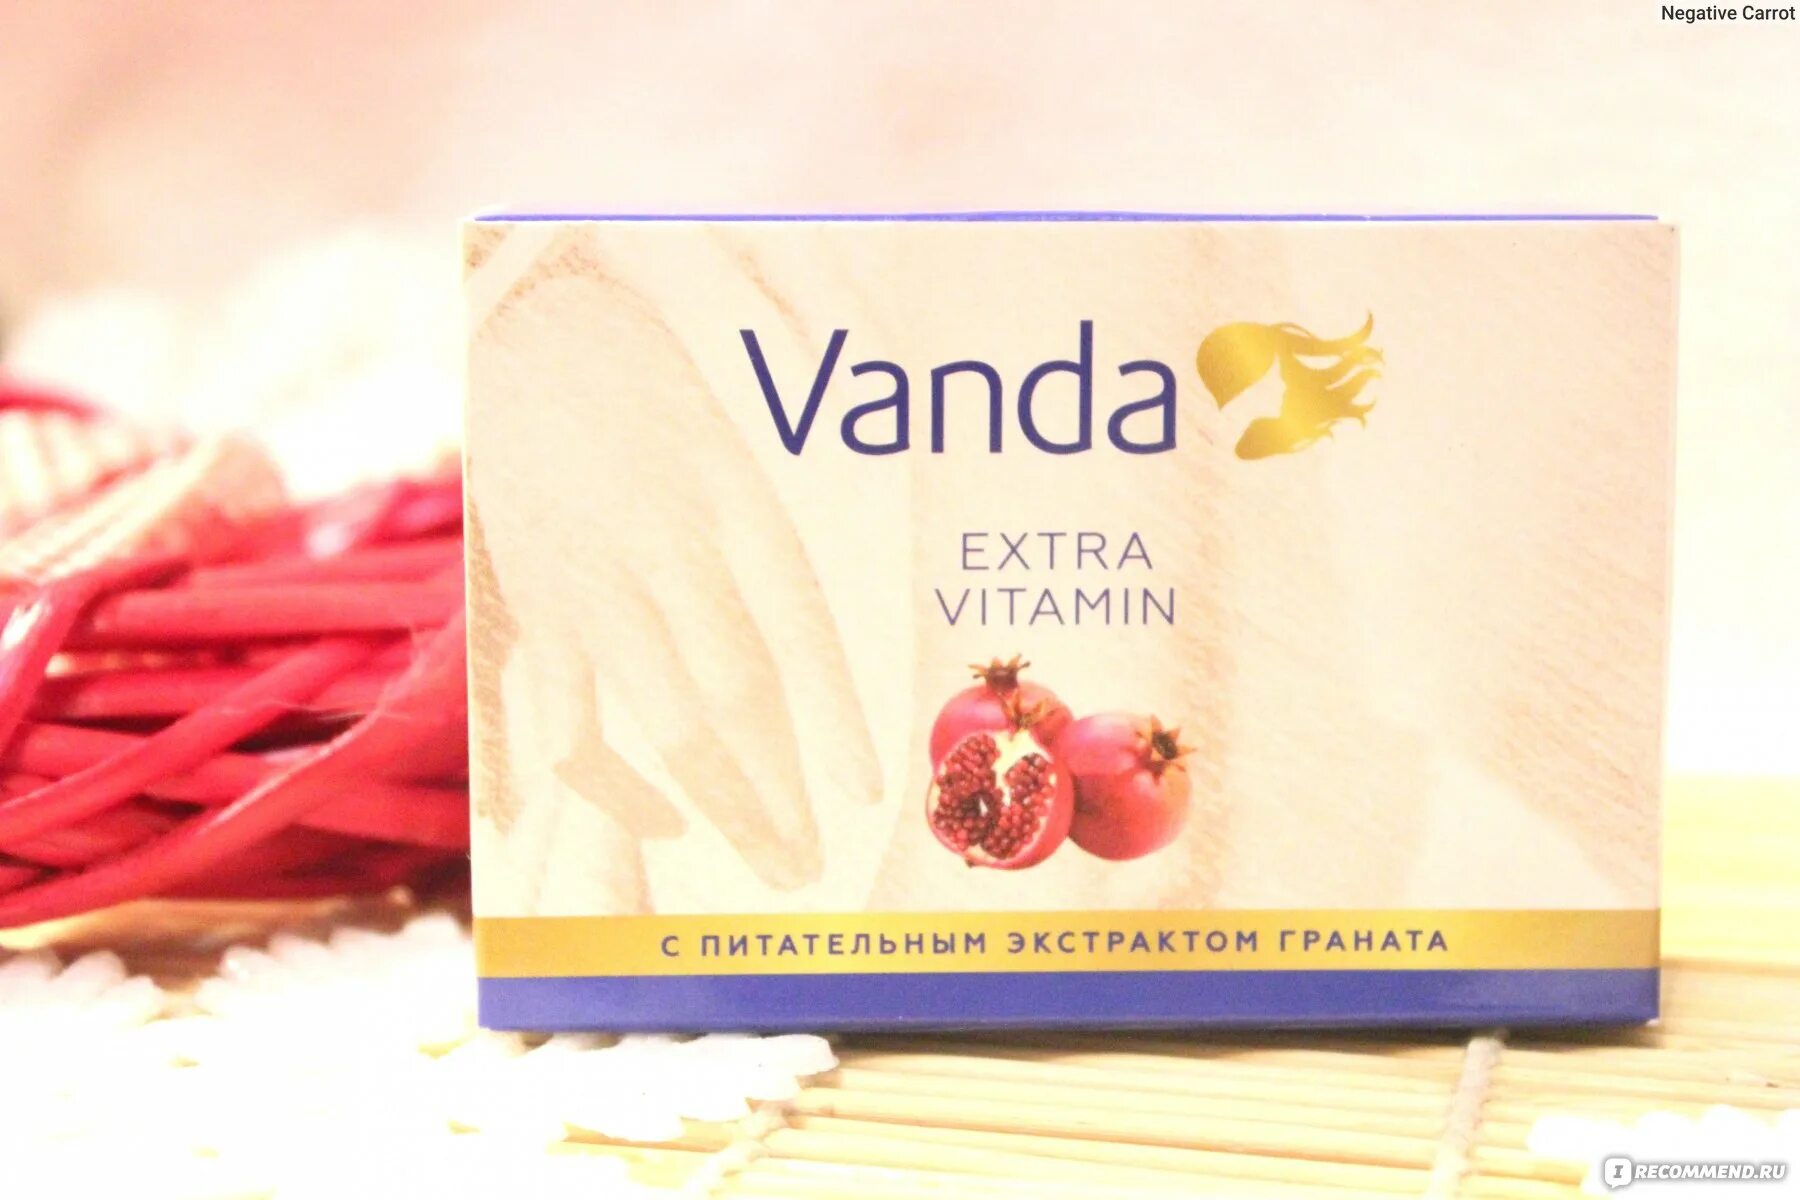 Vitamin extra. Мыло туалетное Vanda Extra Vitamin (витамины) 85г. Dove мыло гранат.